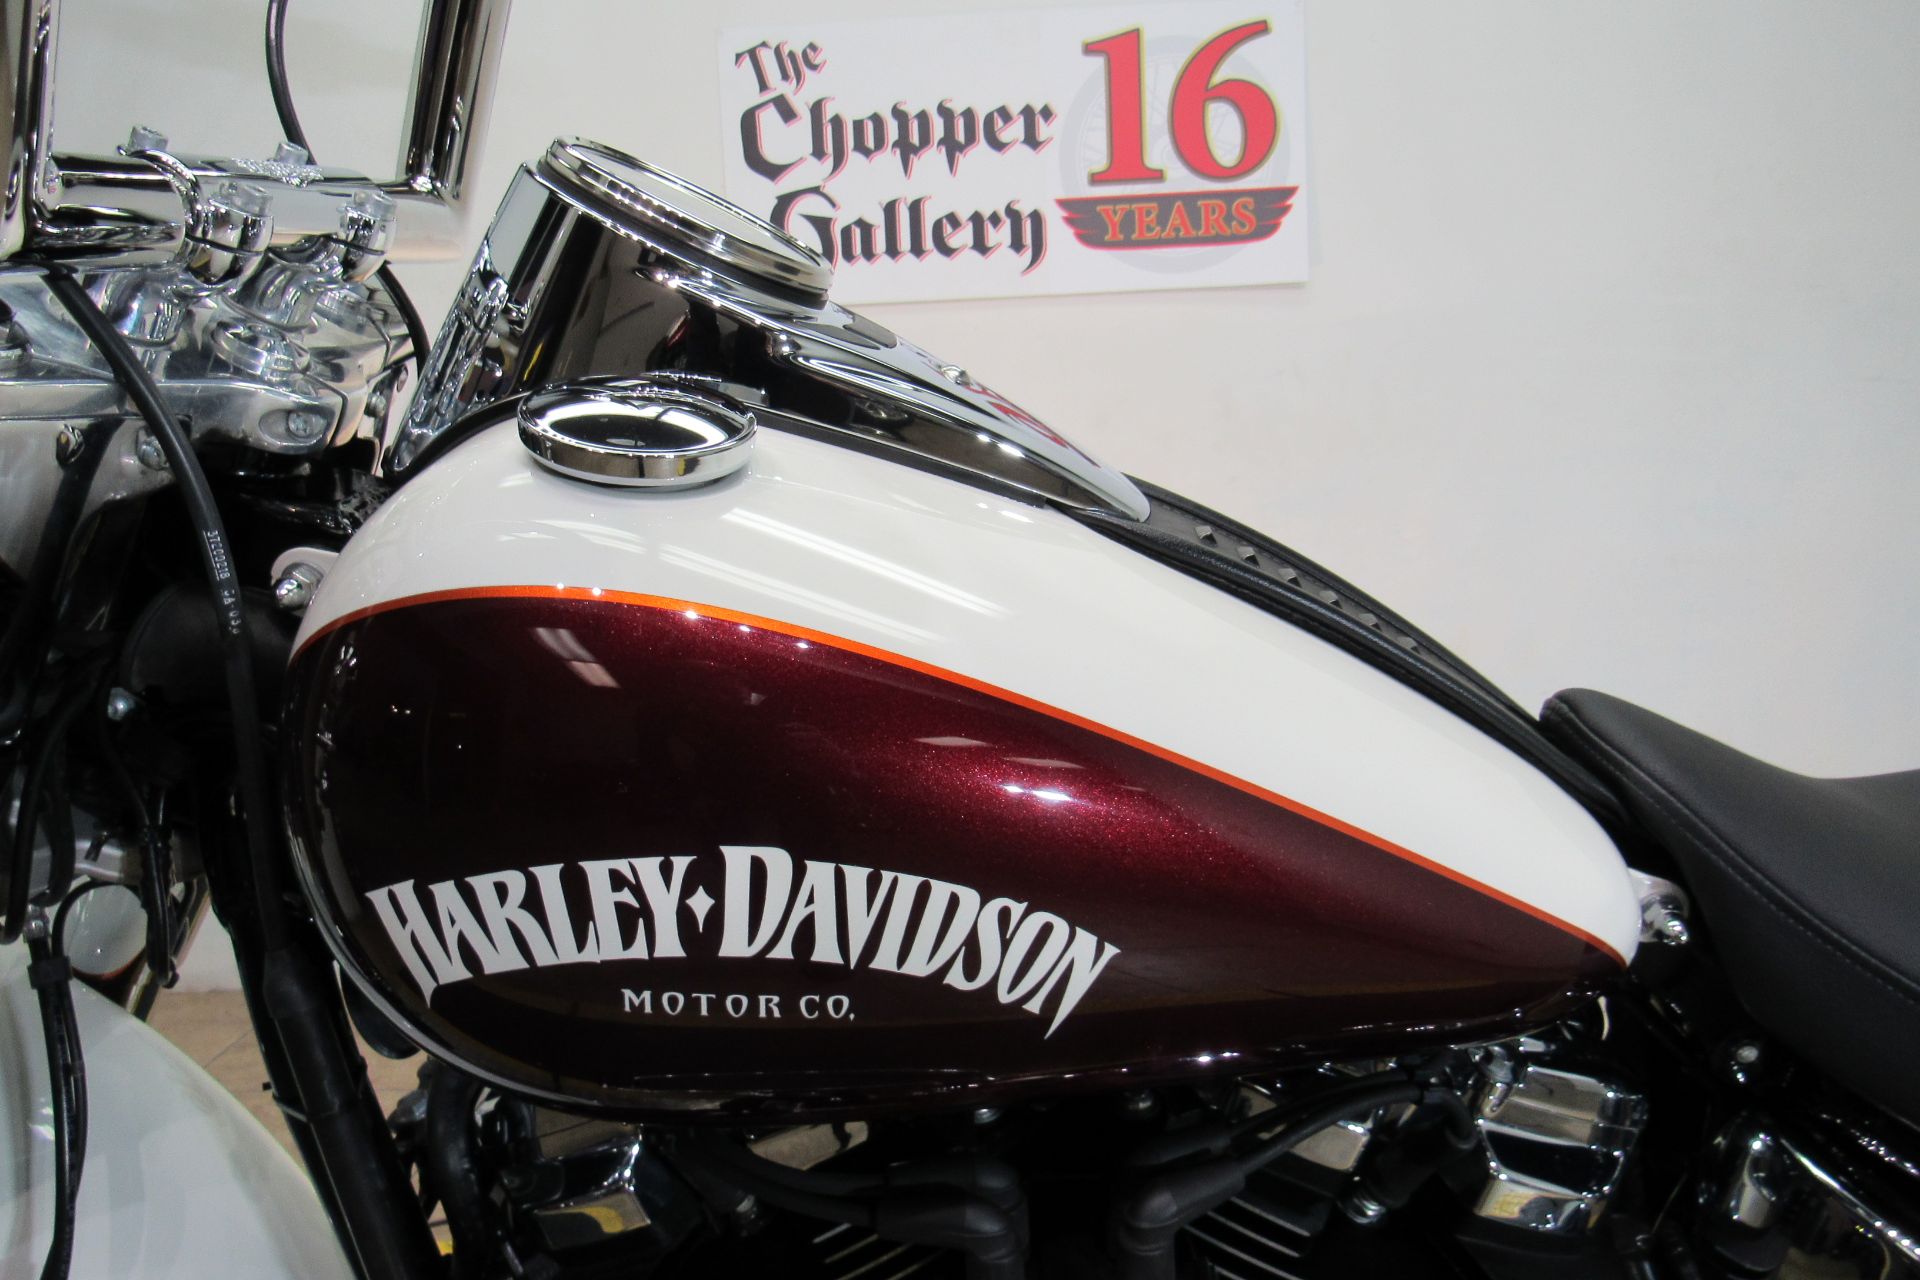 2020 Harley-Davidson Heritage Classic in Temecula, California - Photo 4